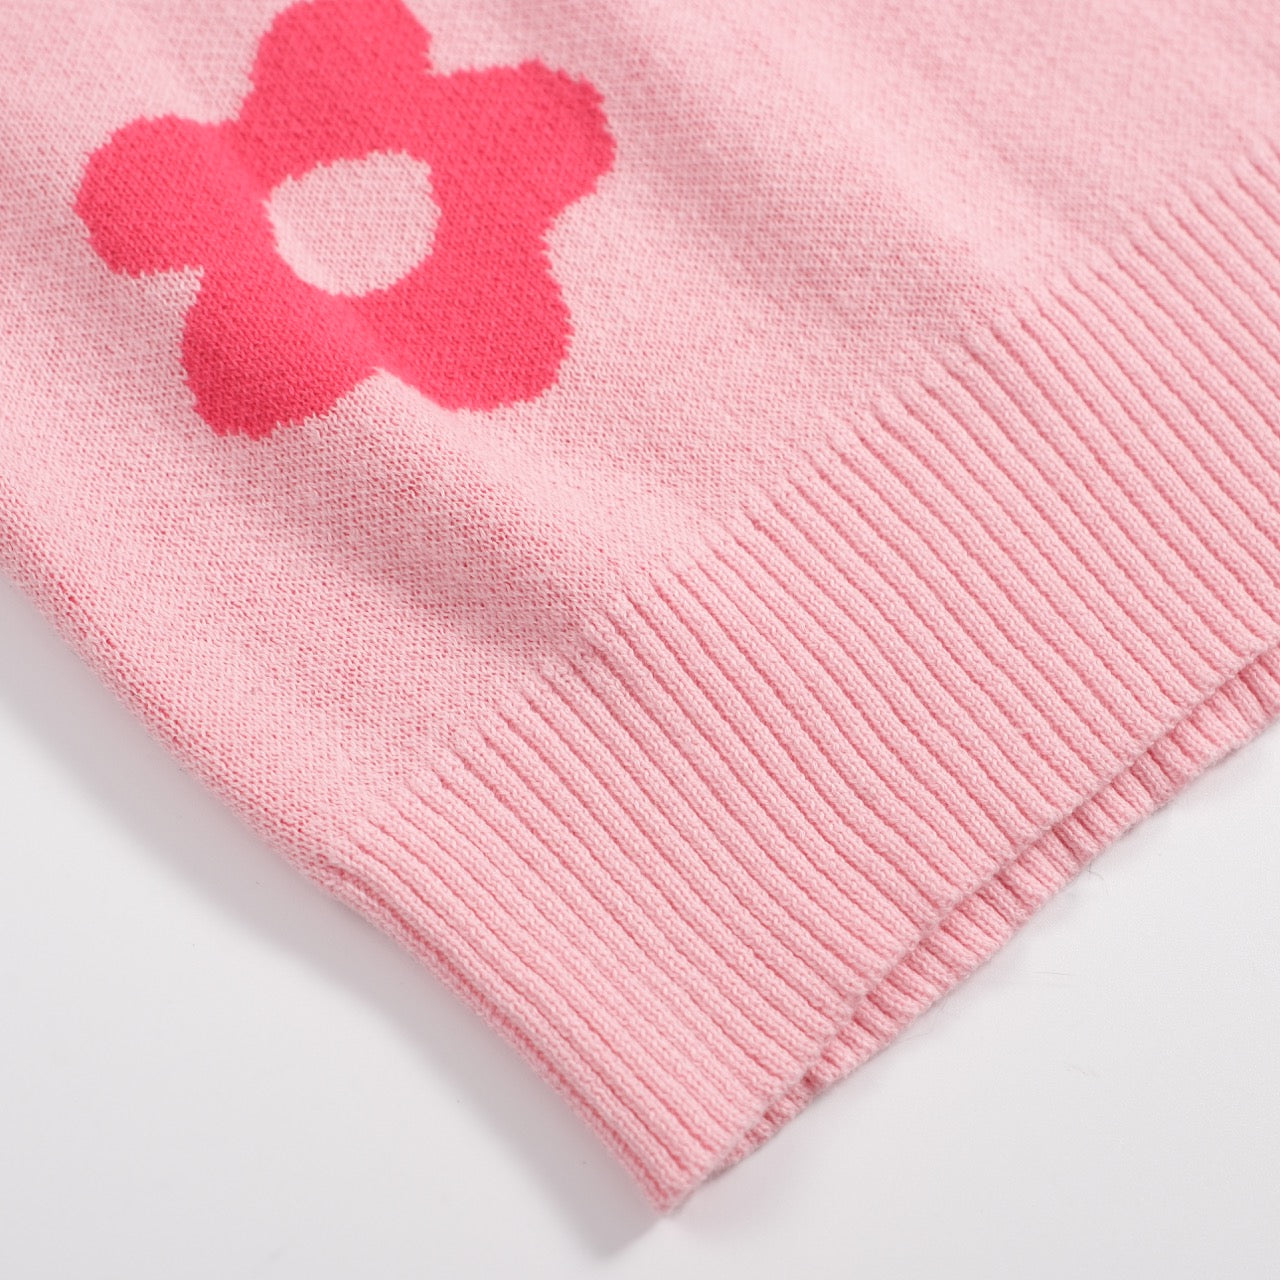 Men's pink vintage floral knit polo shirt